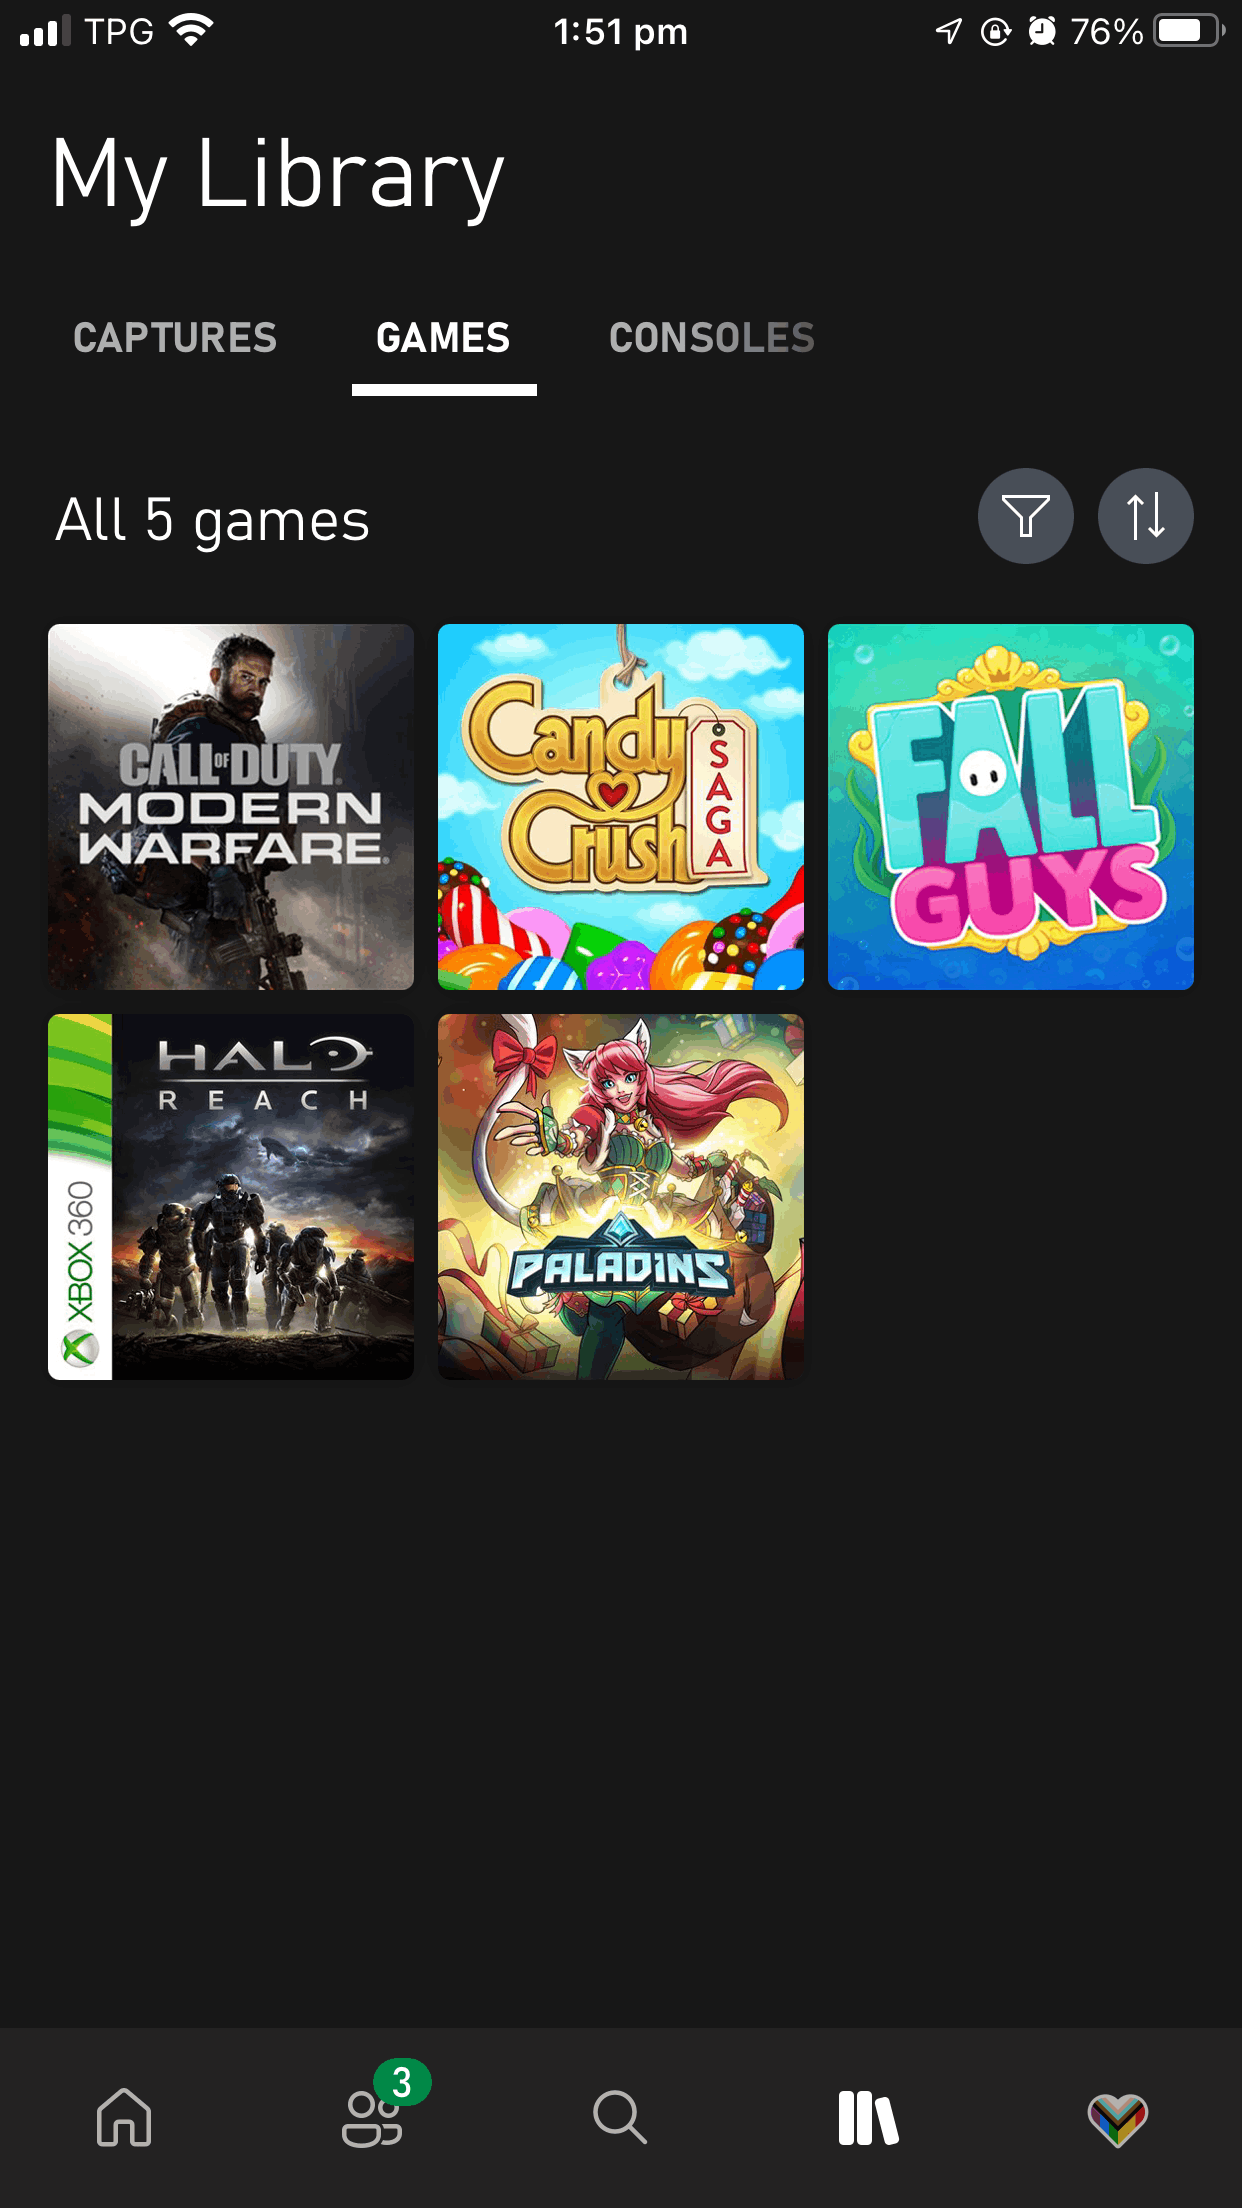 Candy Crush Saga apparaît sur le store Xbox – XboxSquad